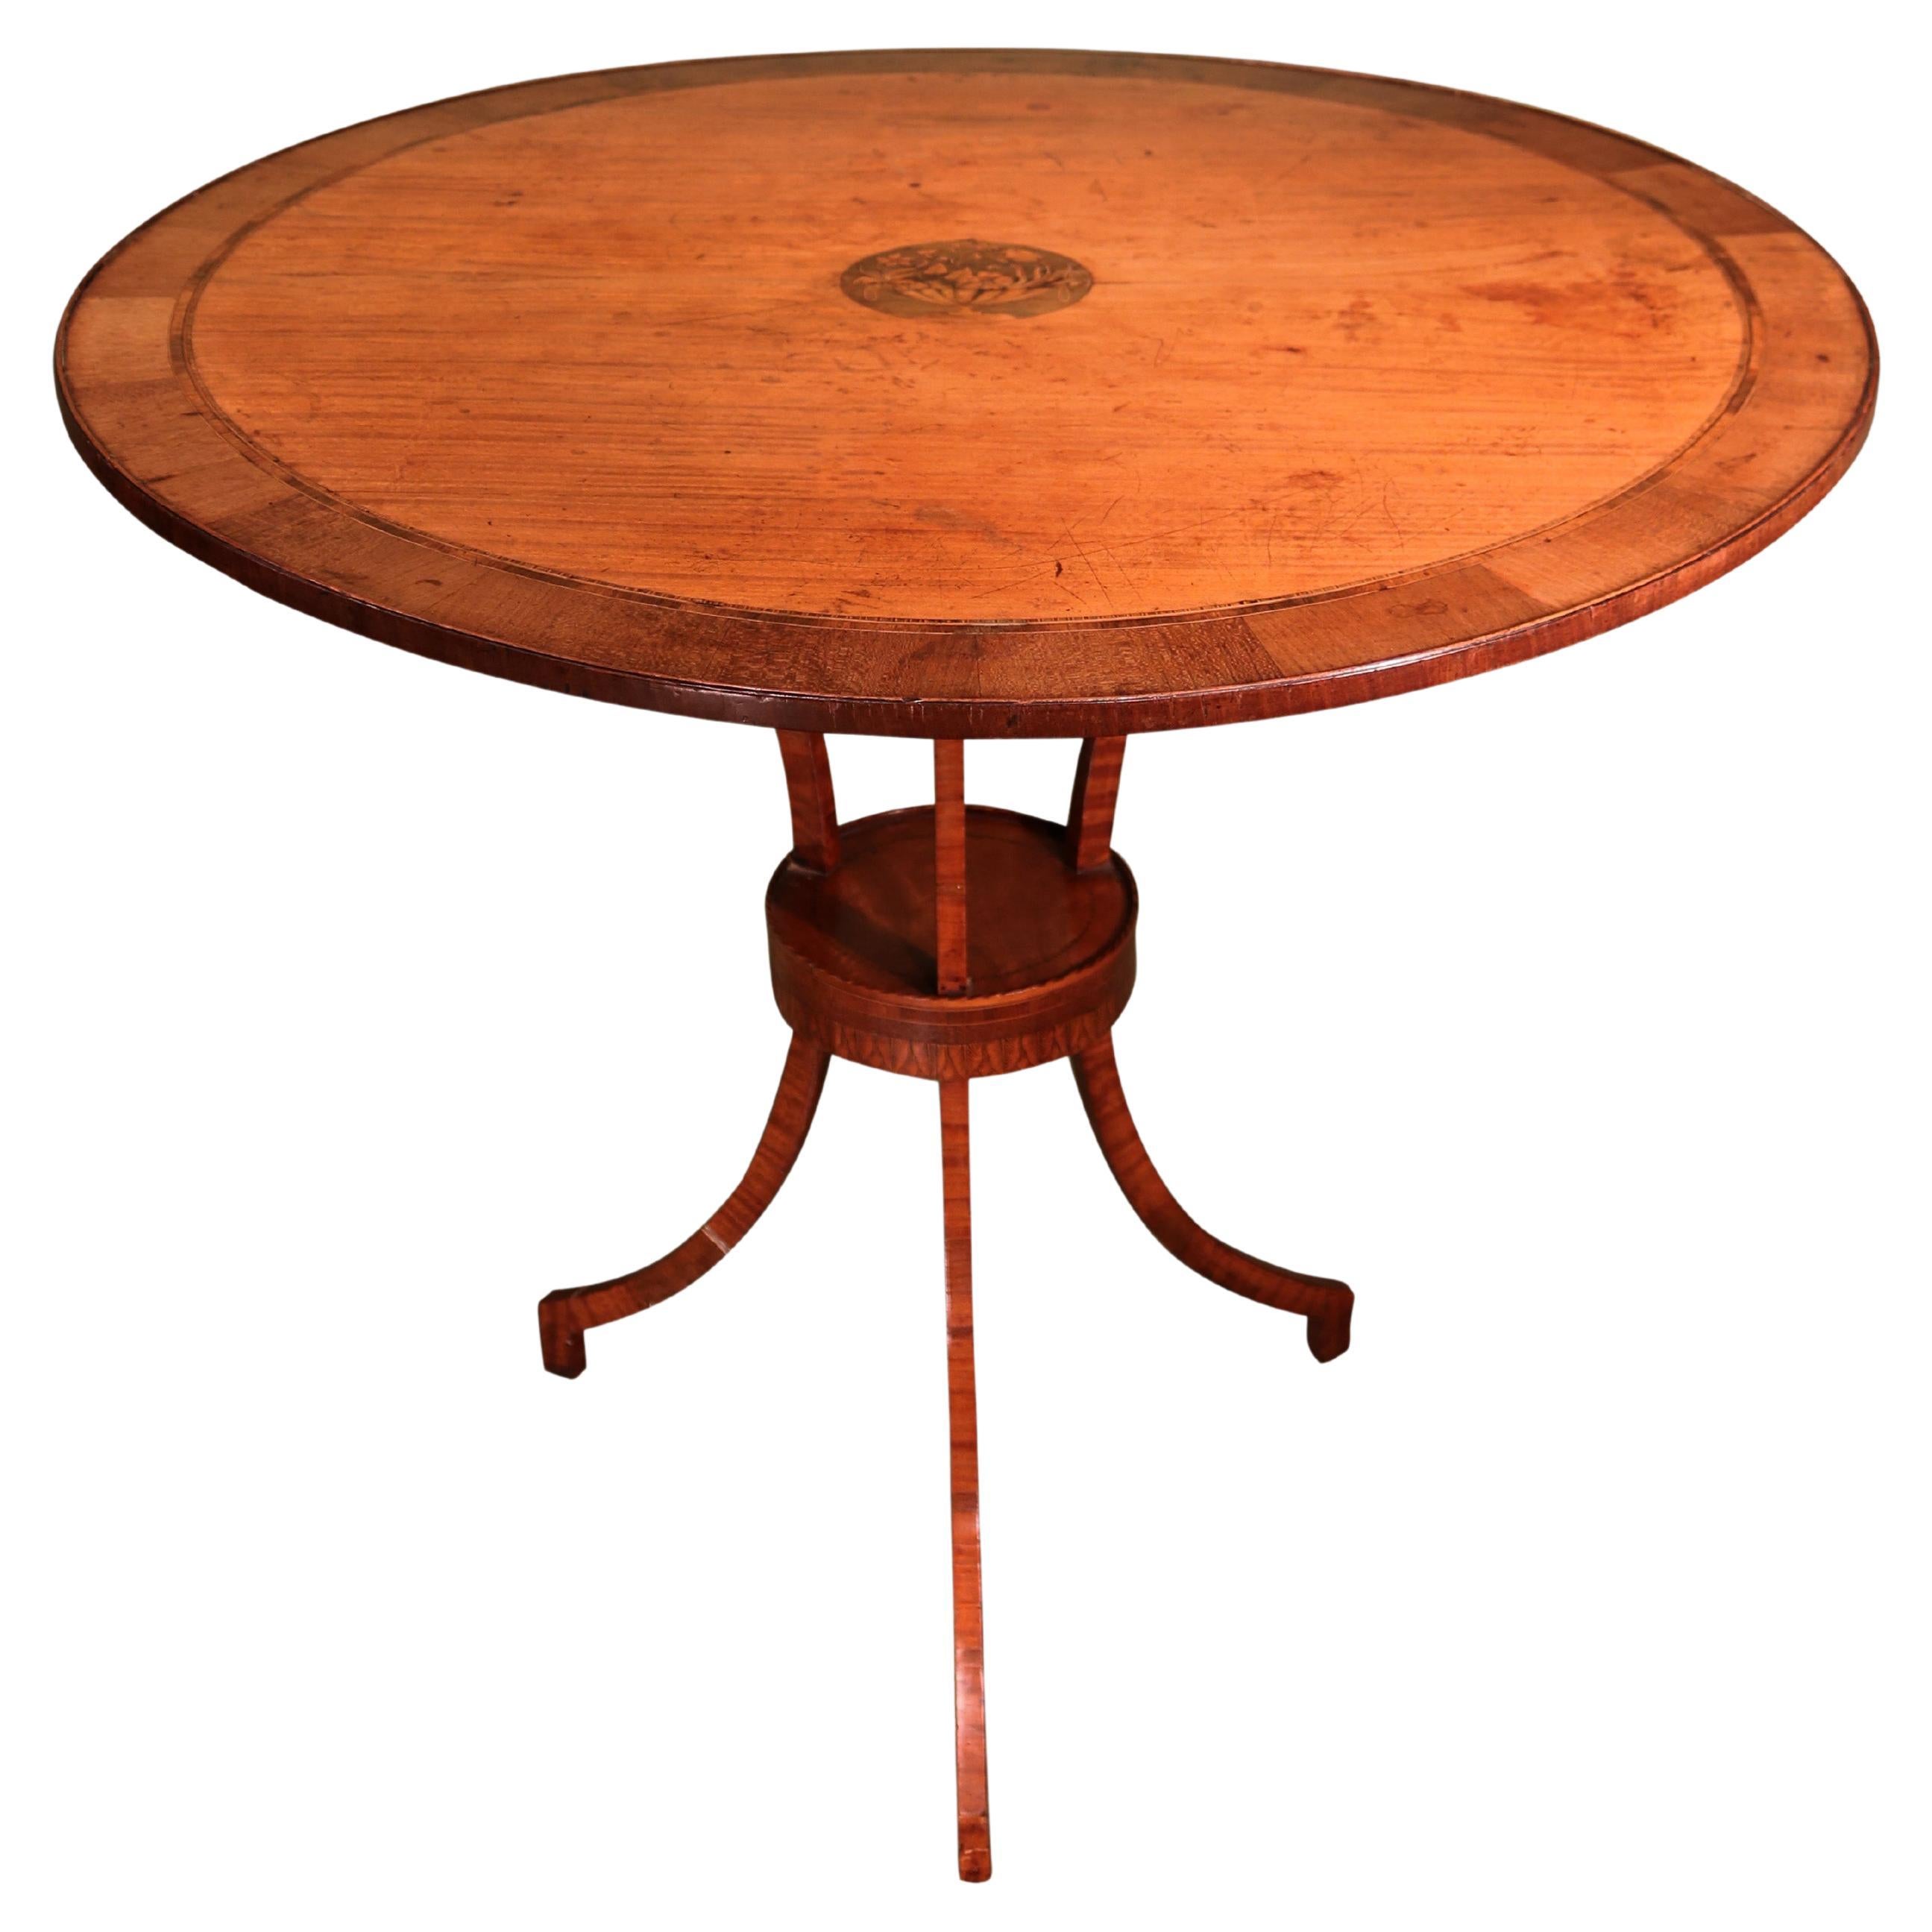 Antique George III period satinwood circular centre table